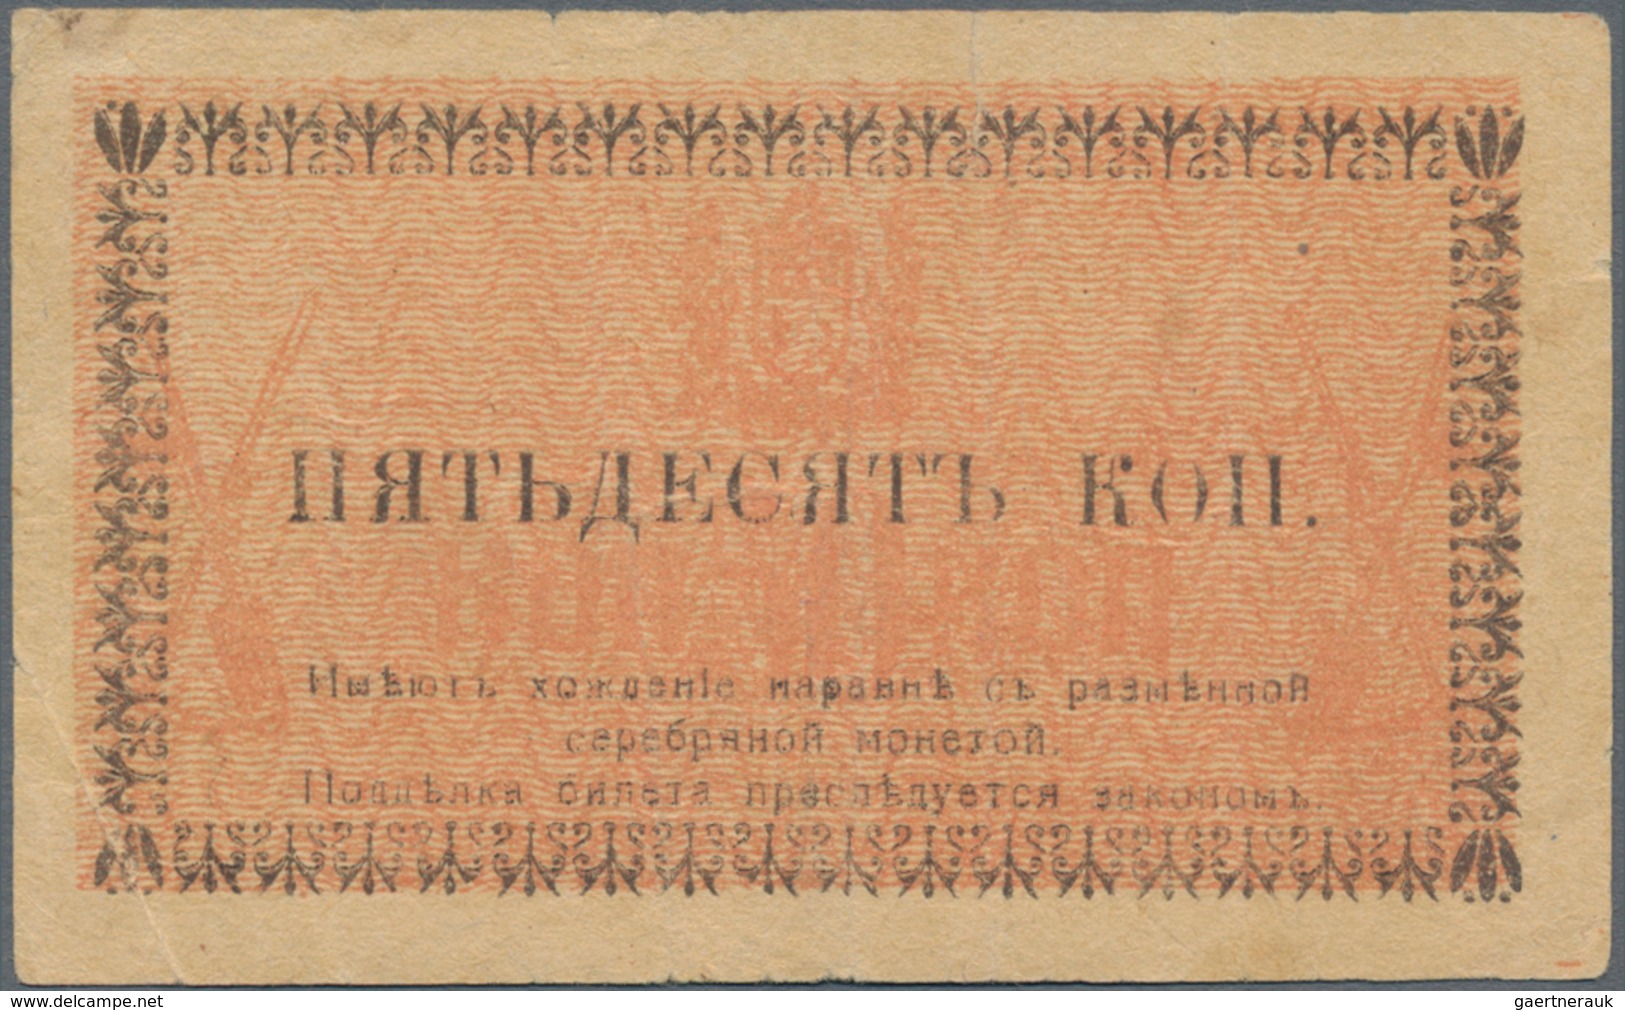 Russia / Russland: Central Asia - Semireche Region 50 Kopeks ND(1918), P.S1117a (R. 20601, K. 2b), D - Russland